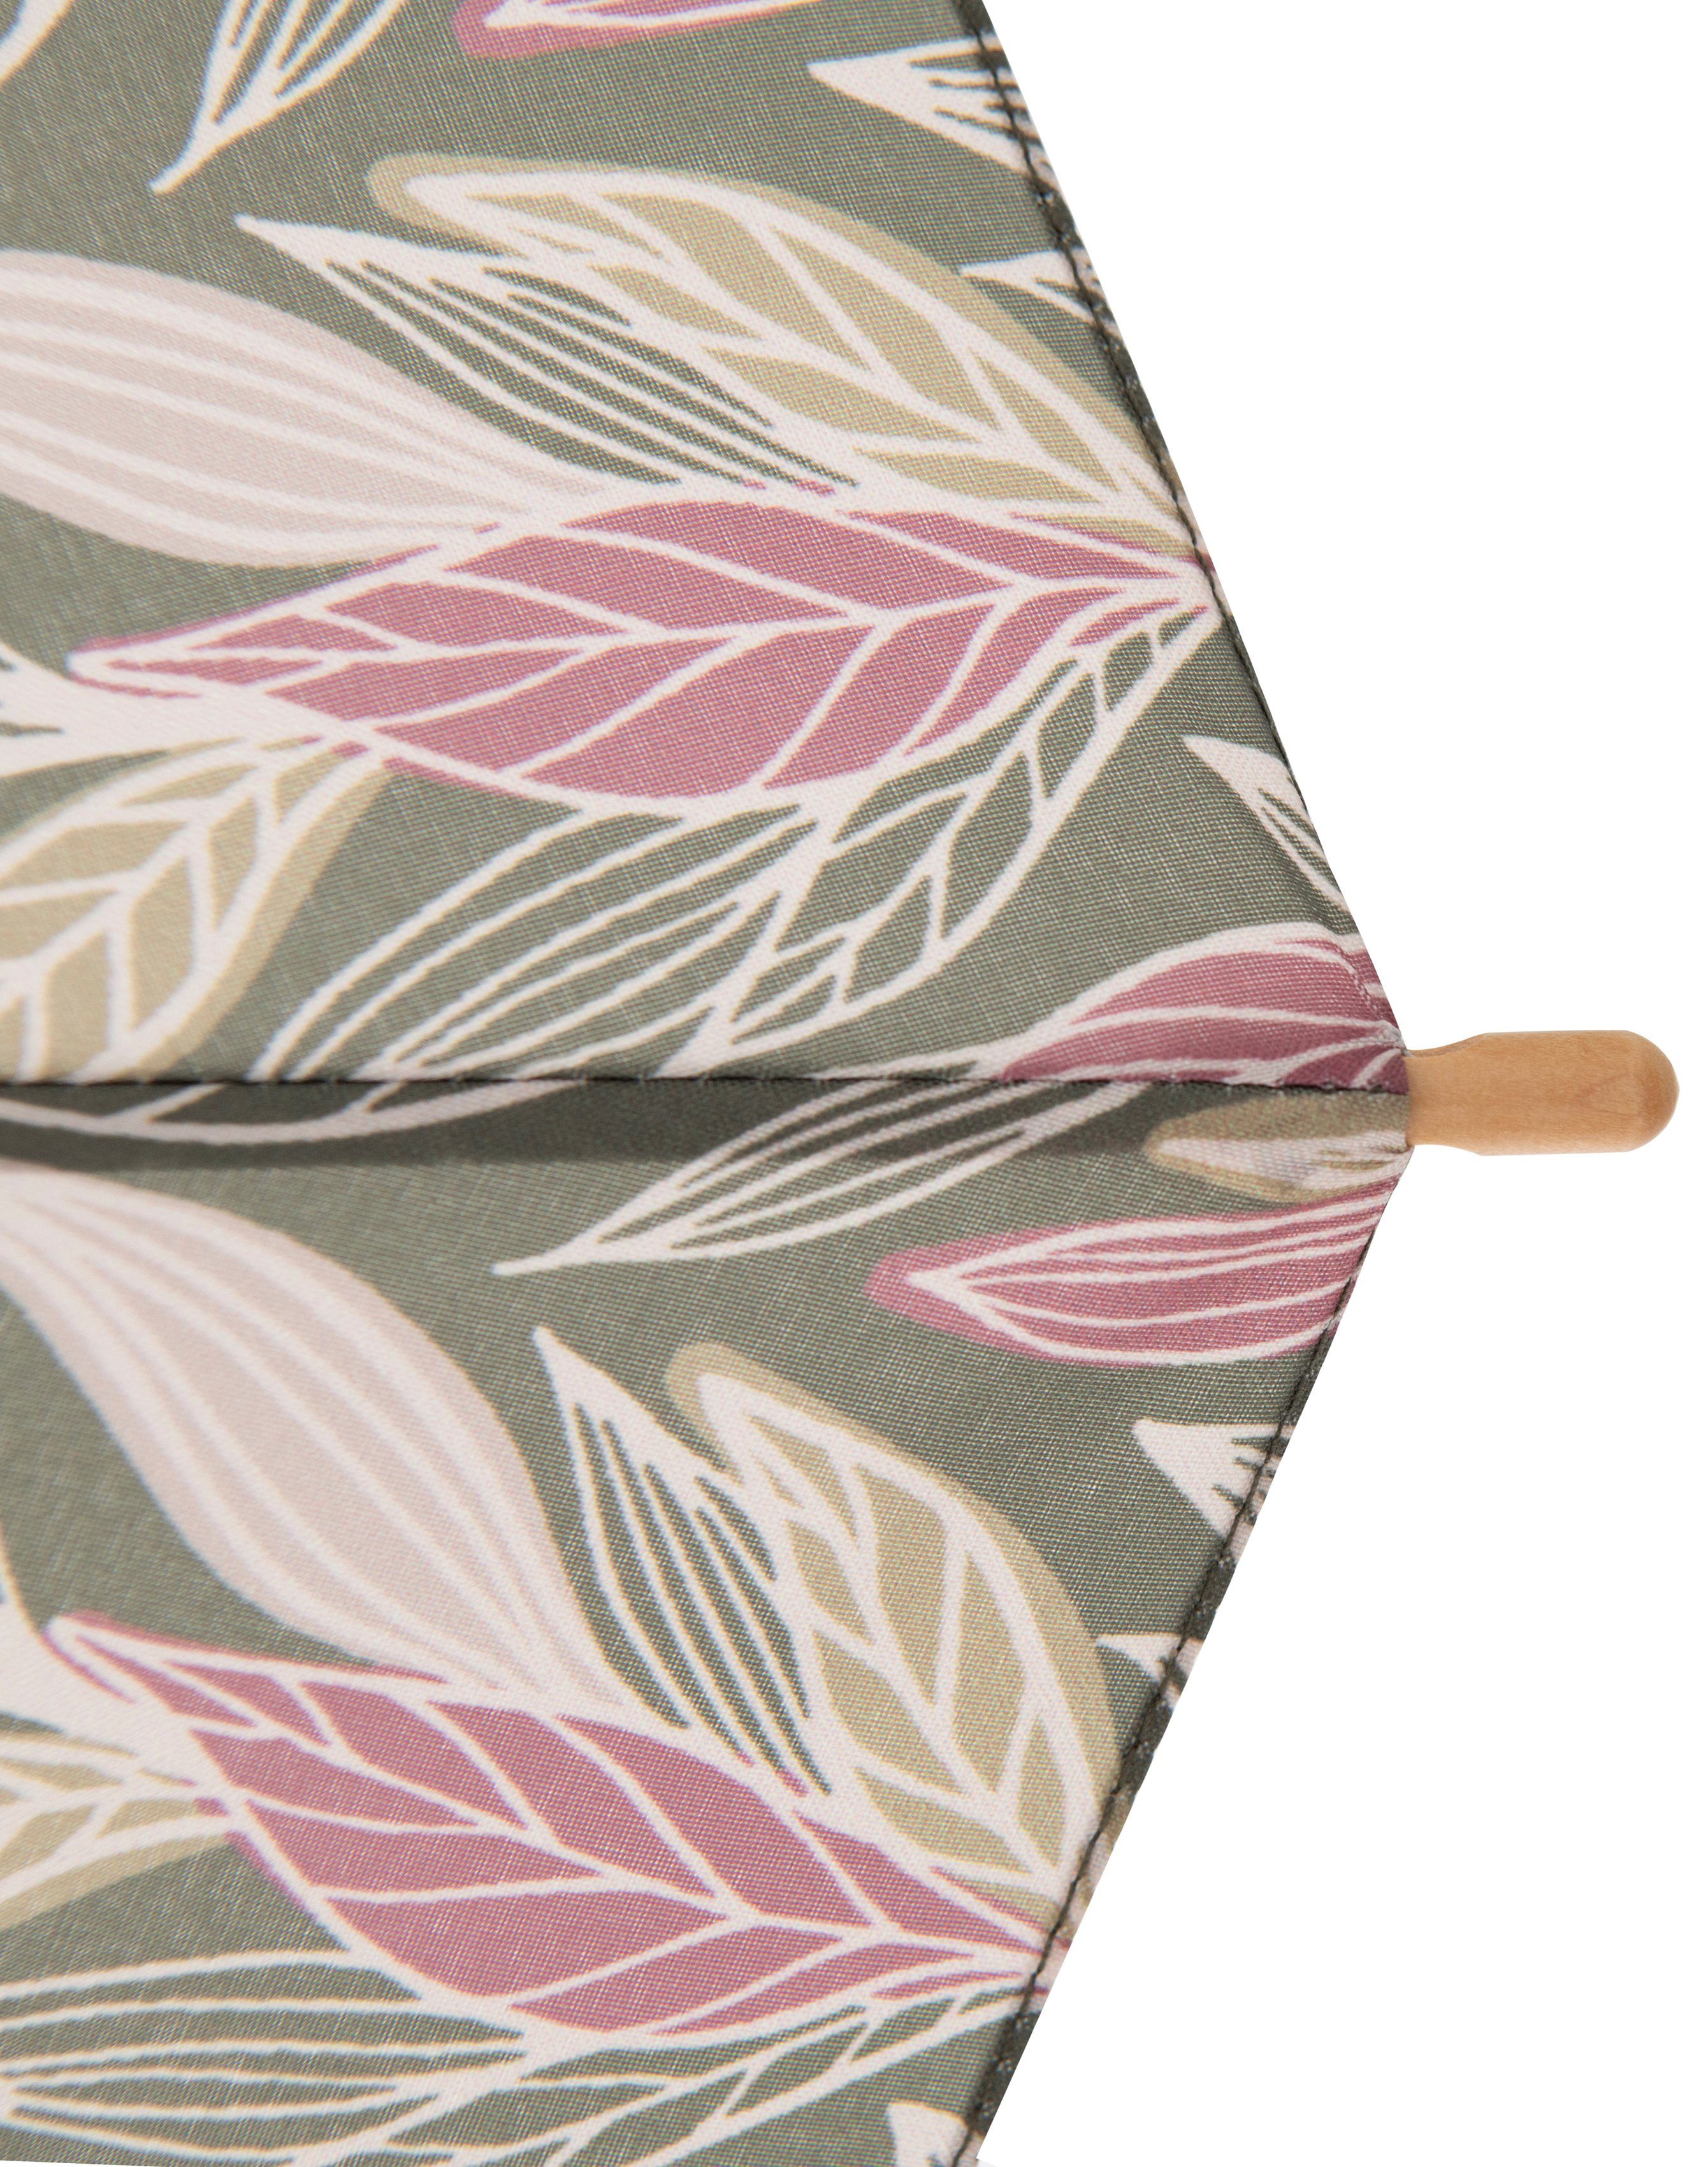 aus Schirmgriff Long, aus doppler® Holz mit Material recyceltem olive, Stockregenschirm nature intention